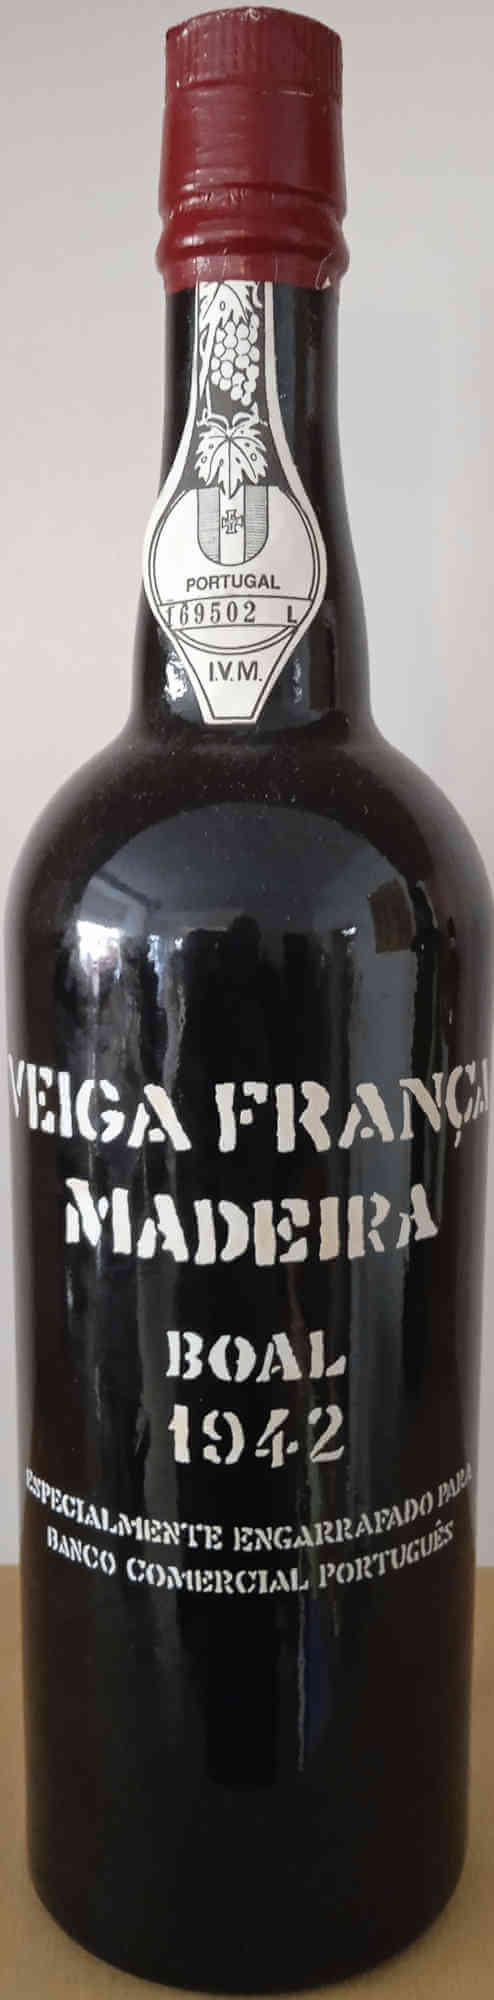 Veiga-Franca-Madeira-Boal-1942